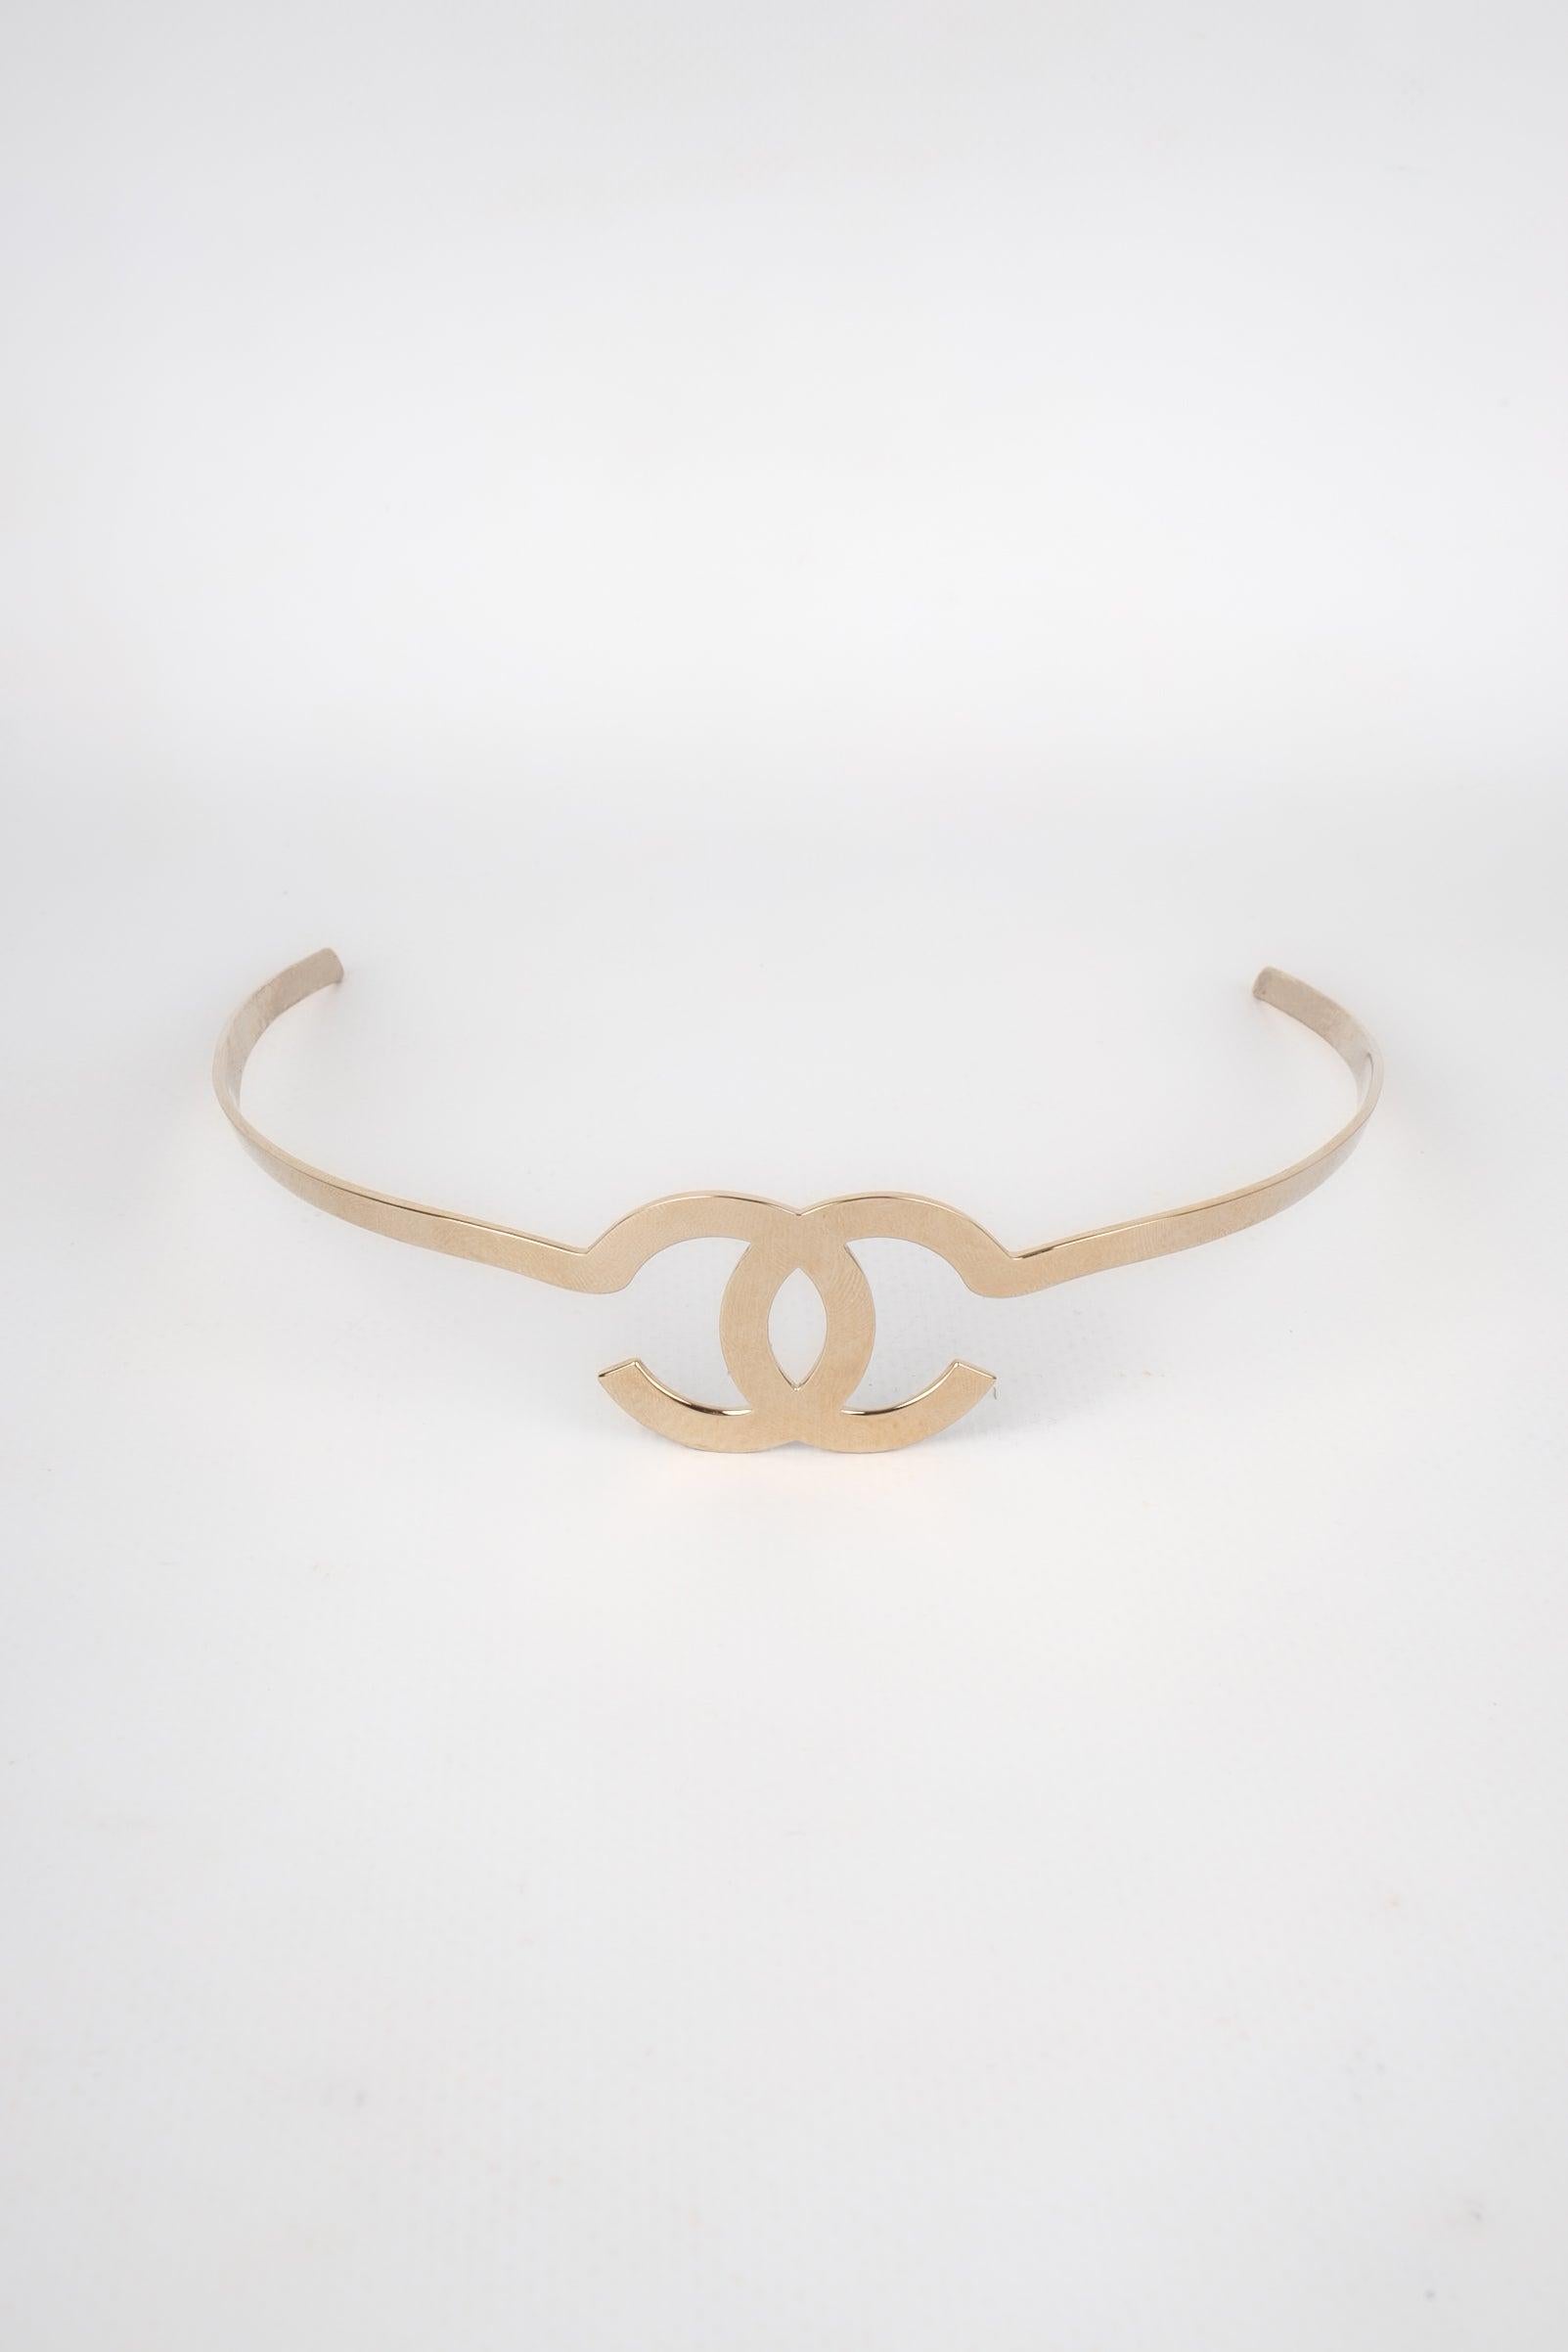 Chanel Very Light Golden Metal Tiara / Head Jewelry, 2021 In Excellent Condition For Sale In SAINT-OUEN-SUR-SEINE, FR